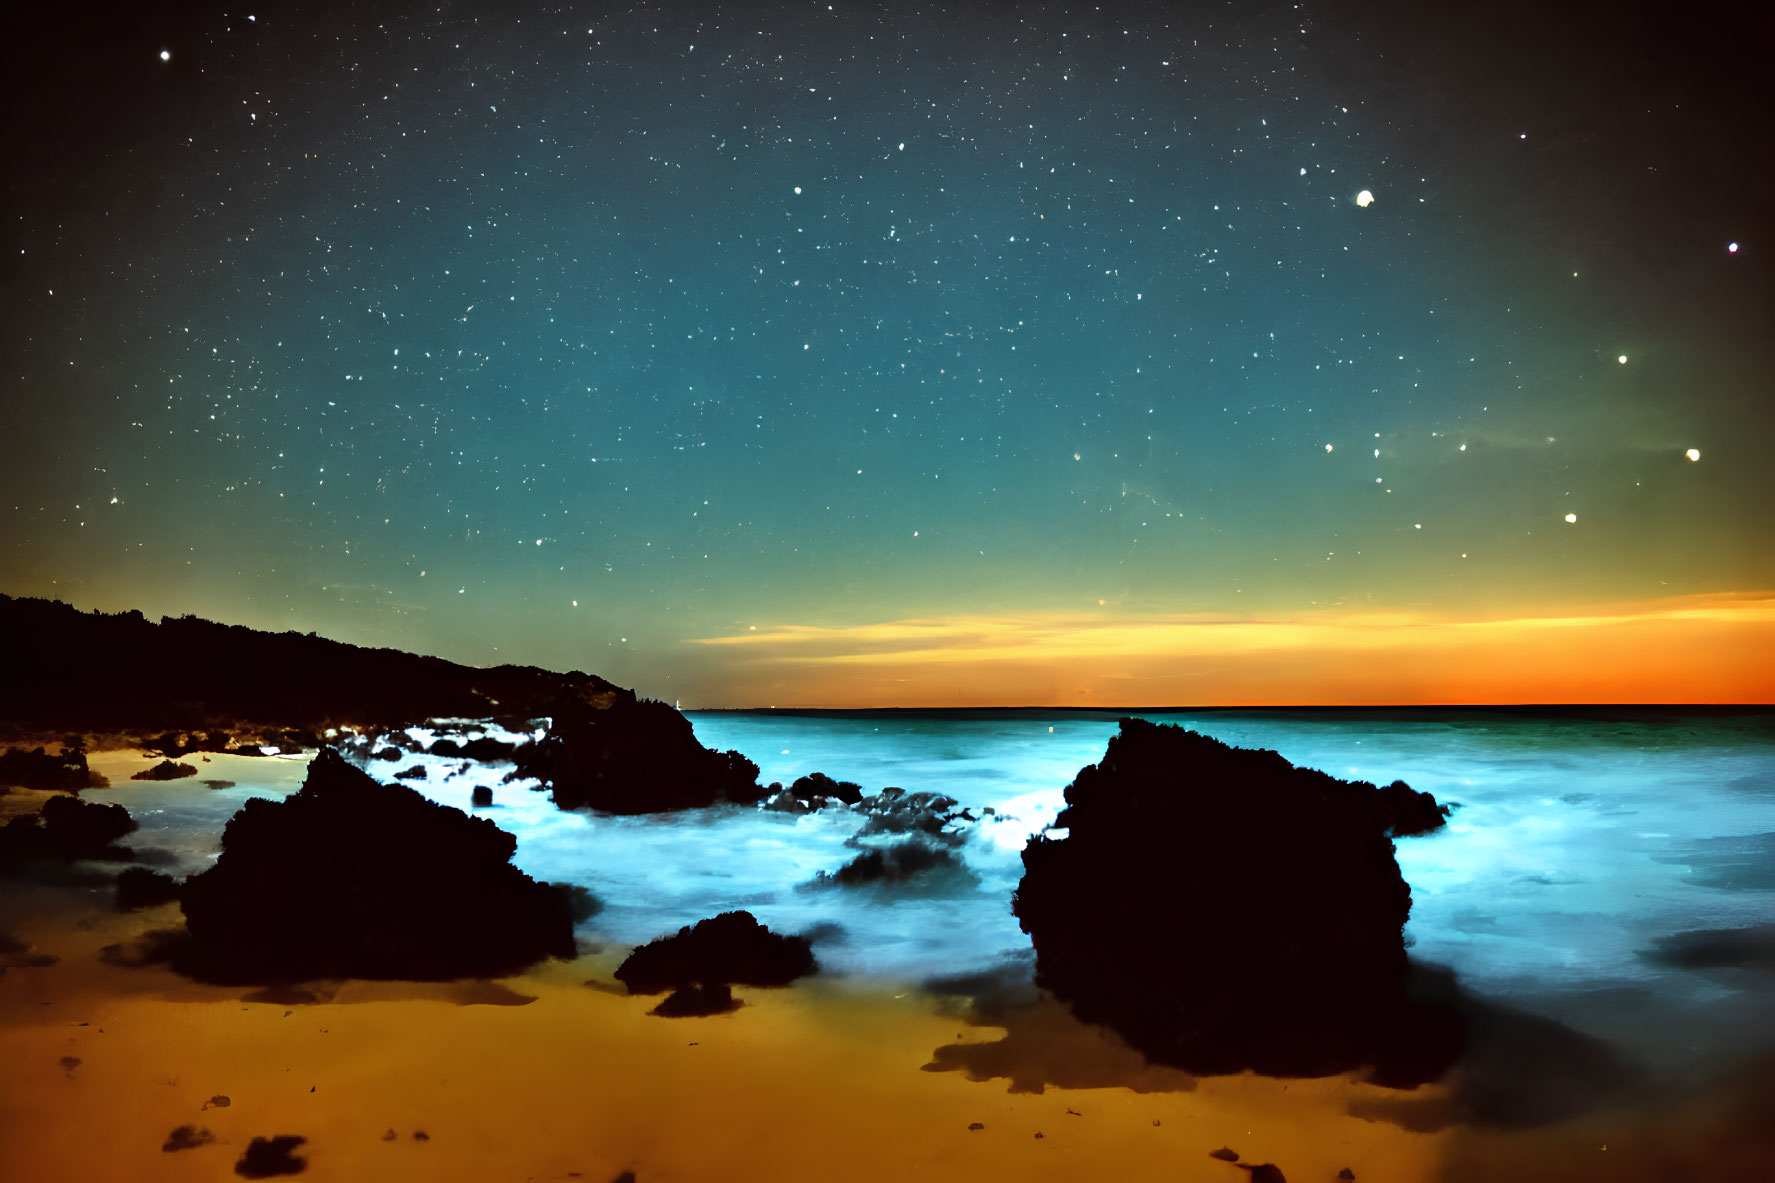 Serene beach scene with starry night sky and warm sunset glow